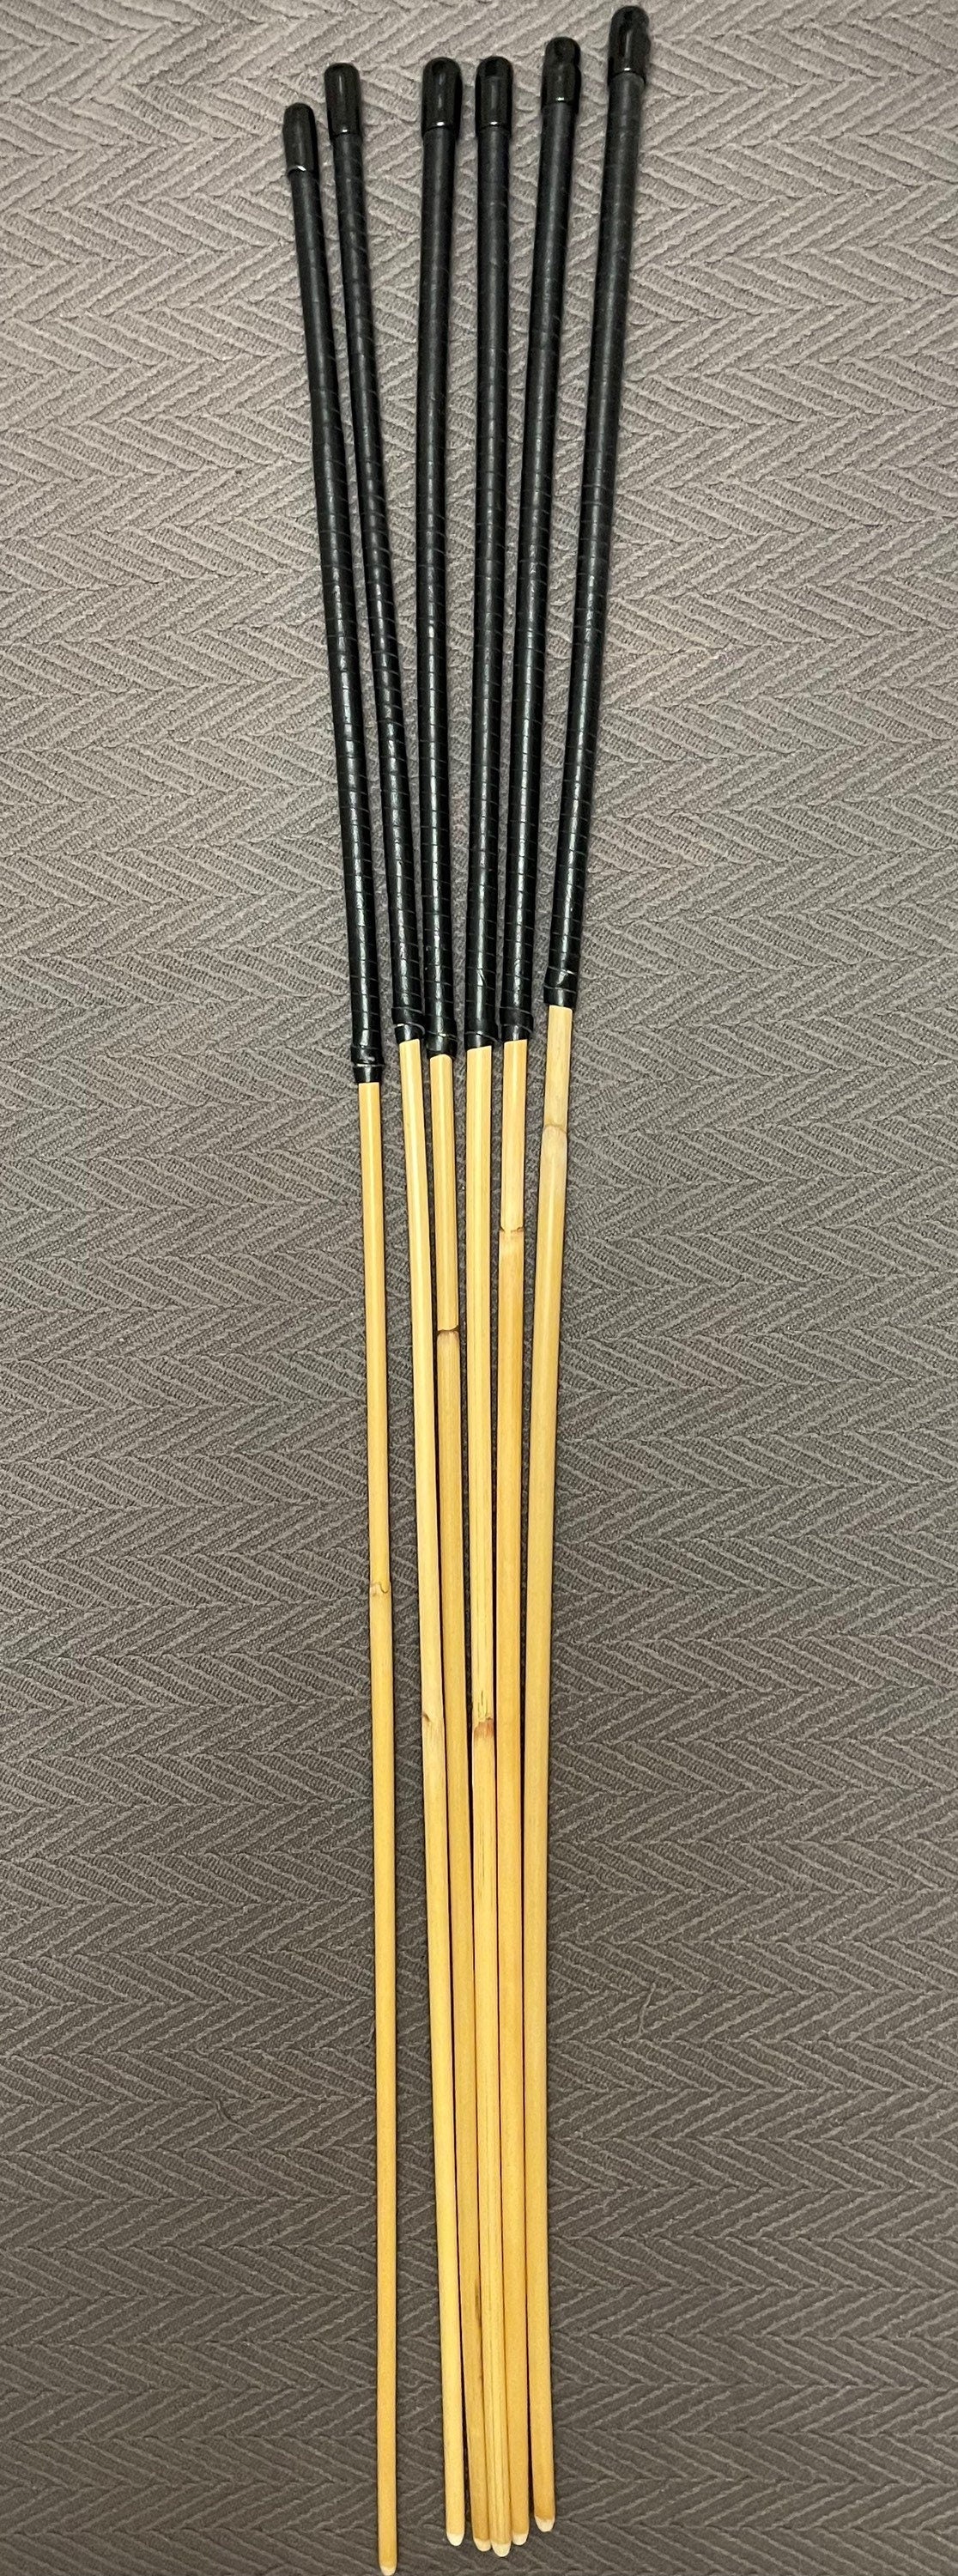 Set of 6 Whippy Swishy Thin Dragon Canes / School Canes / Bastinado Canes with Black Kangaroo Leather Handles - 95 cms Length